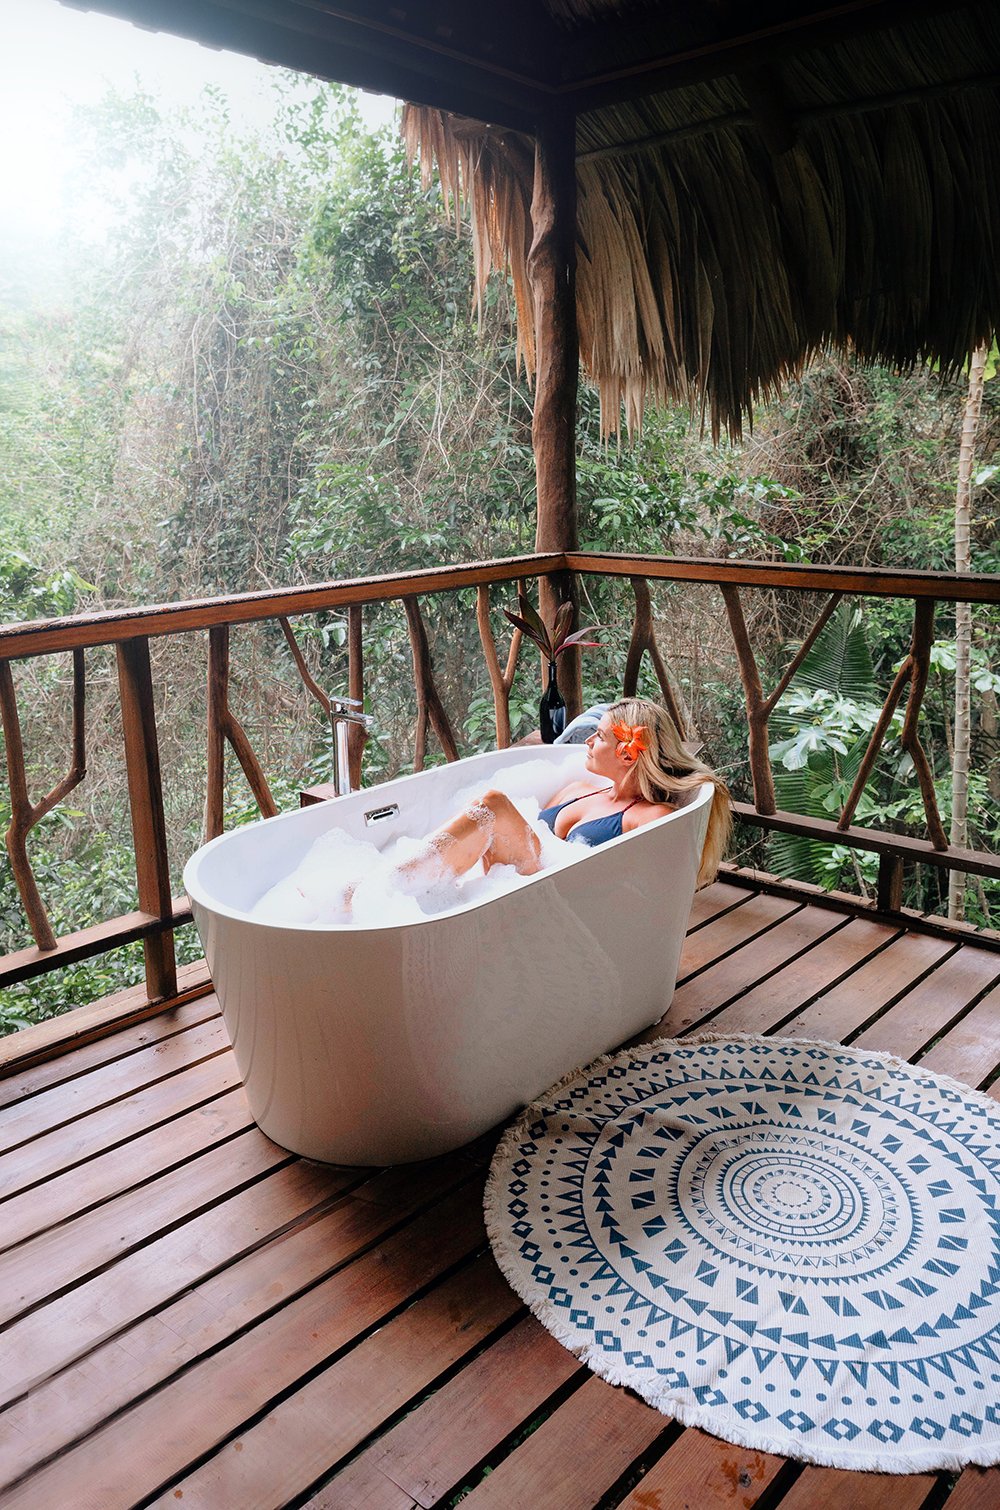 Sweet Songs Jungle Lodge - All Inclusive Honeymoon Resort in Belize